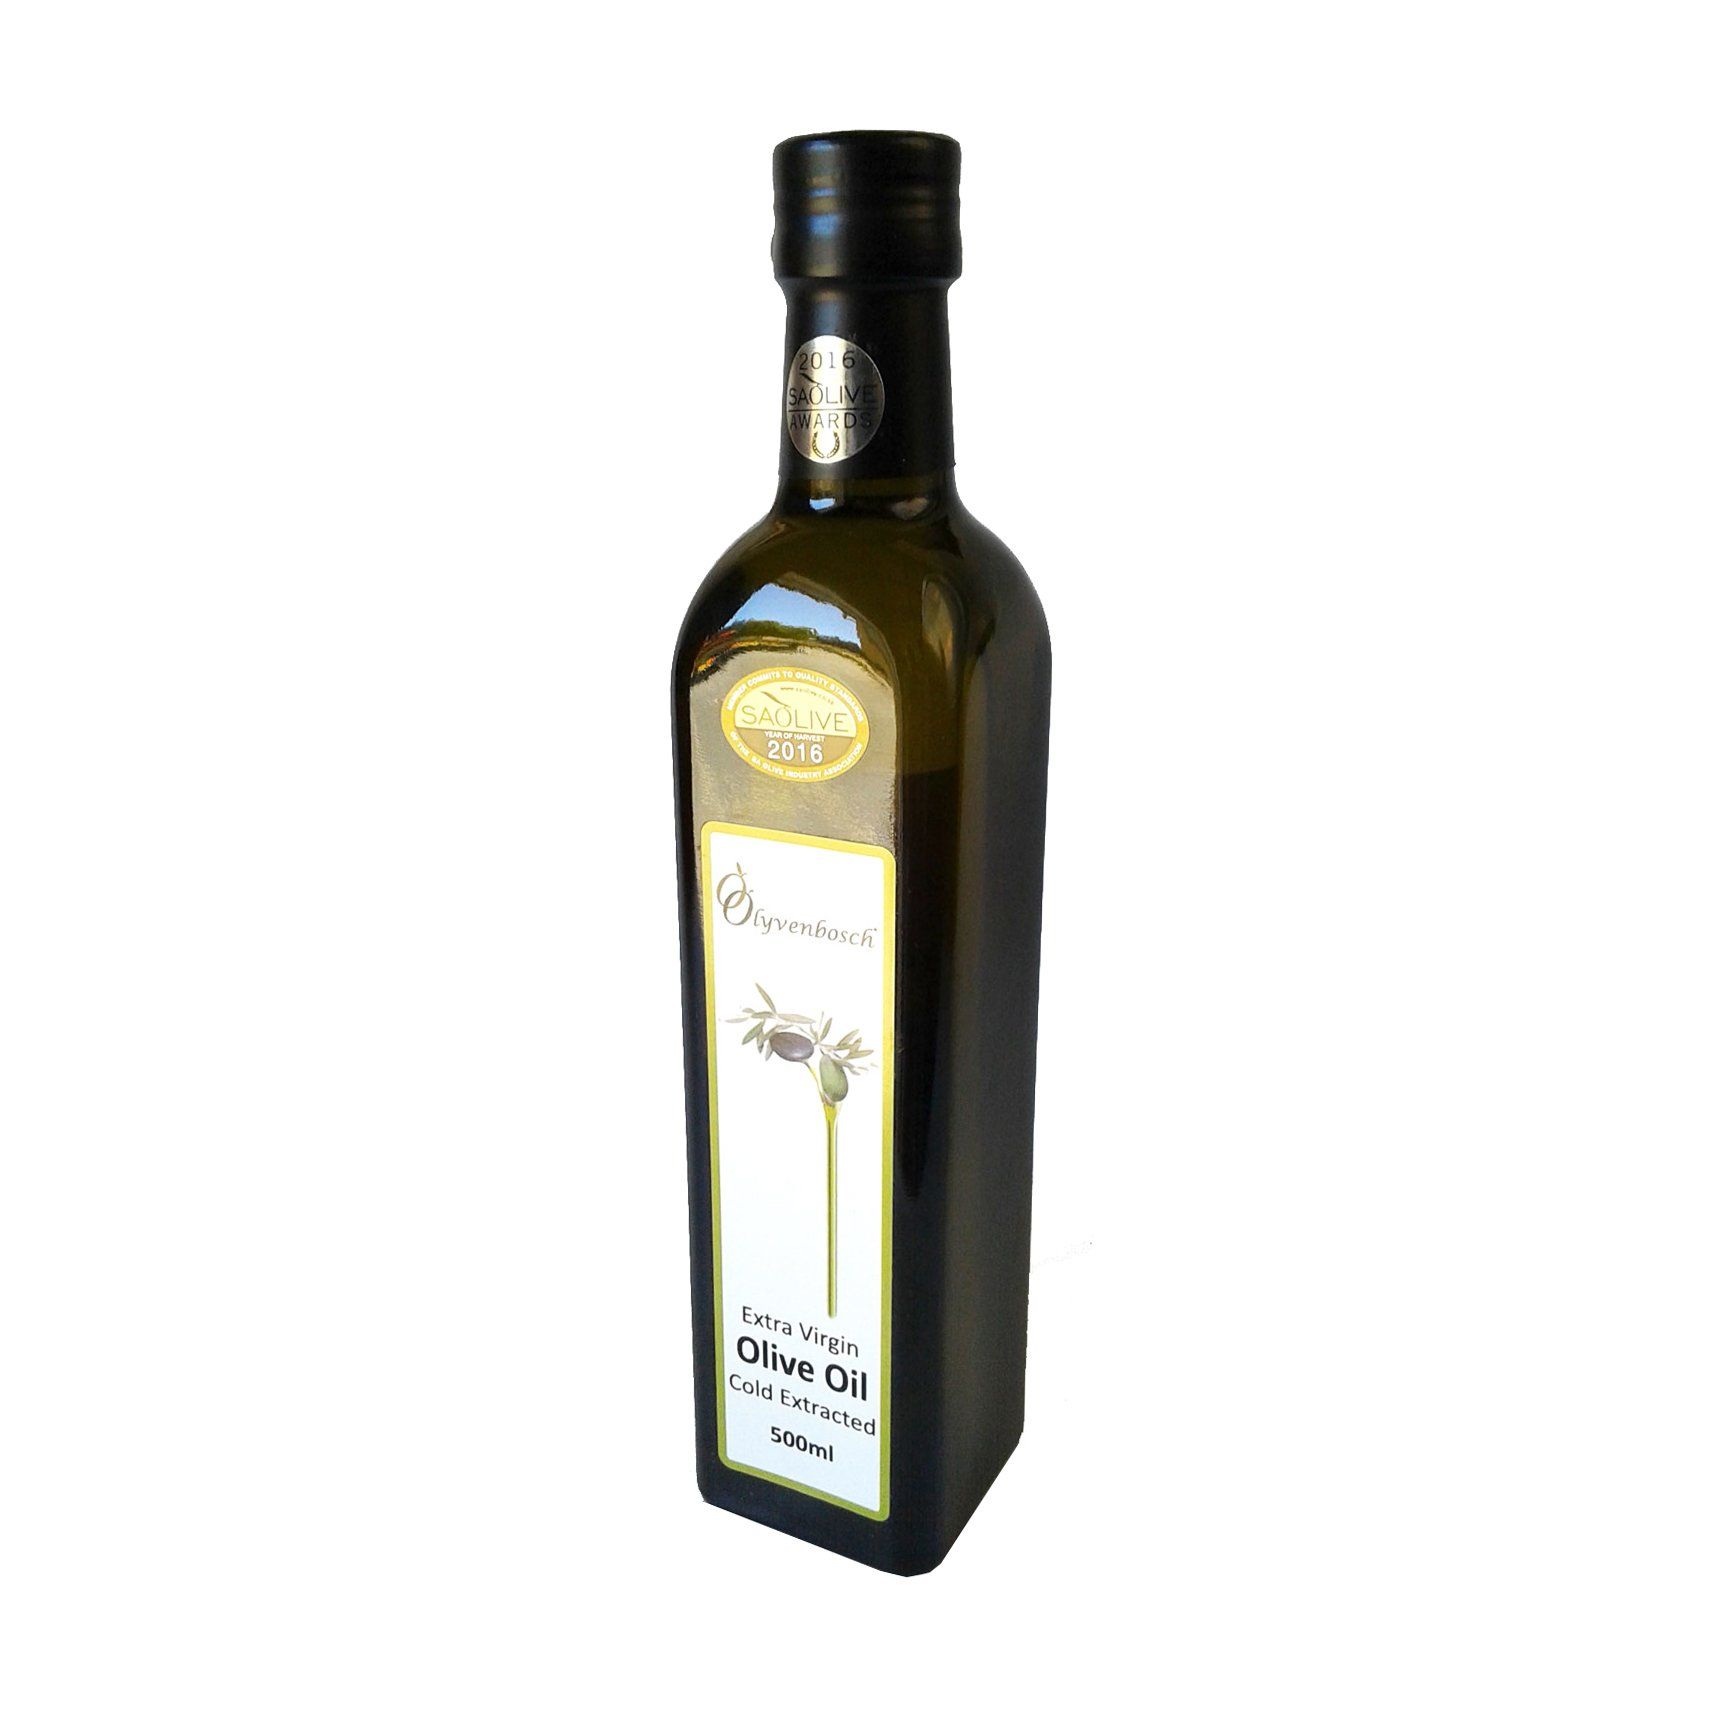 Olyvenbosch Extra Virgin Olive Oil 500ml Glass Bottle food Olyvenbosch Olive Farm